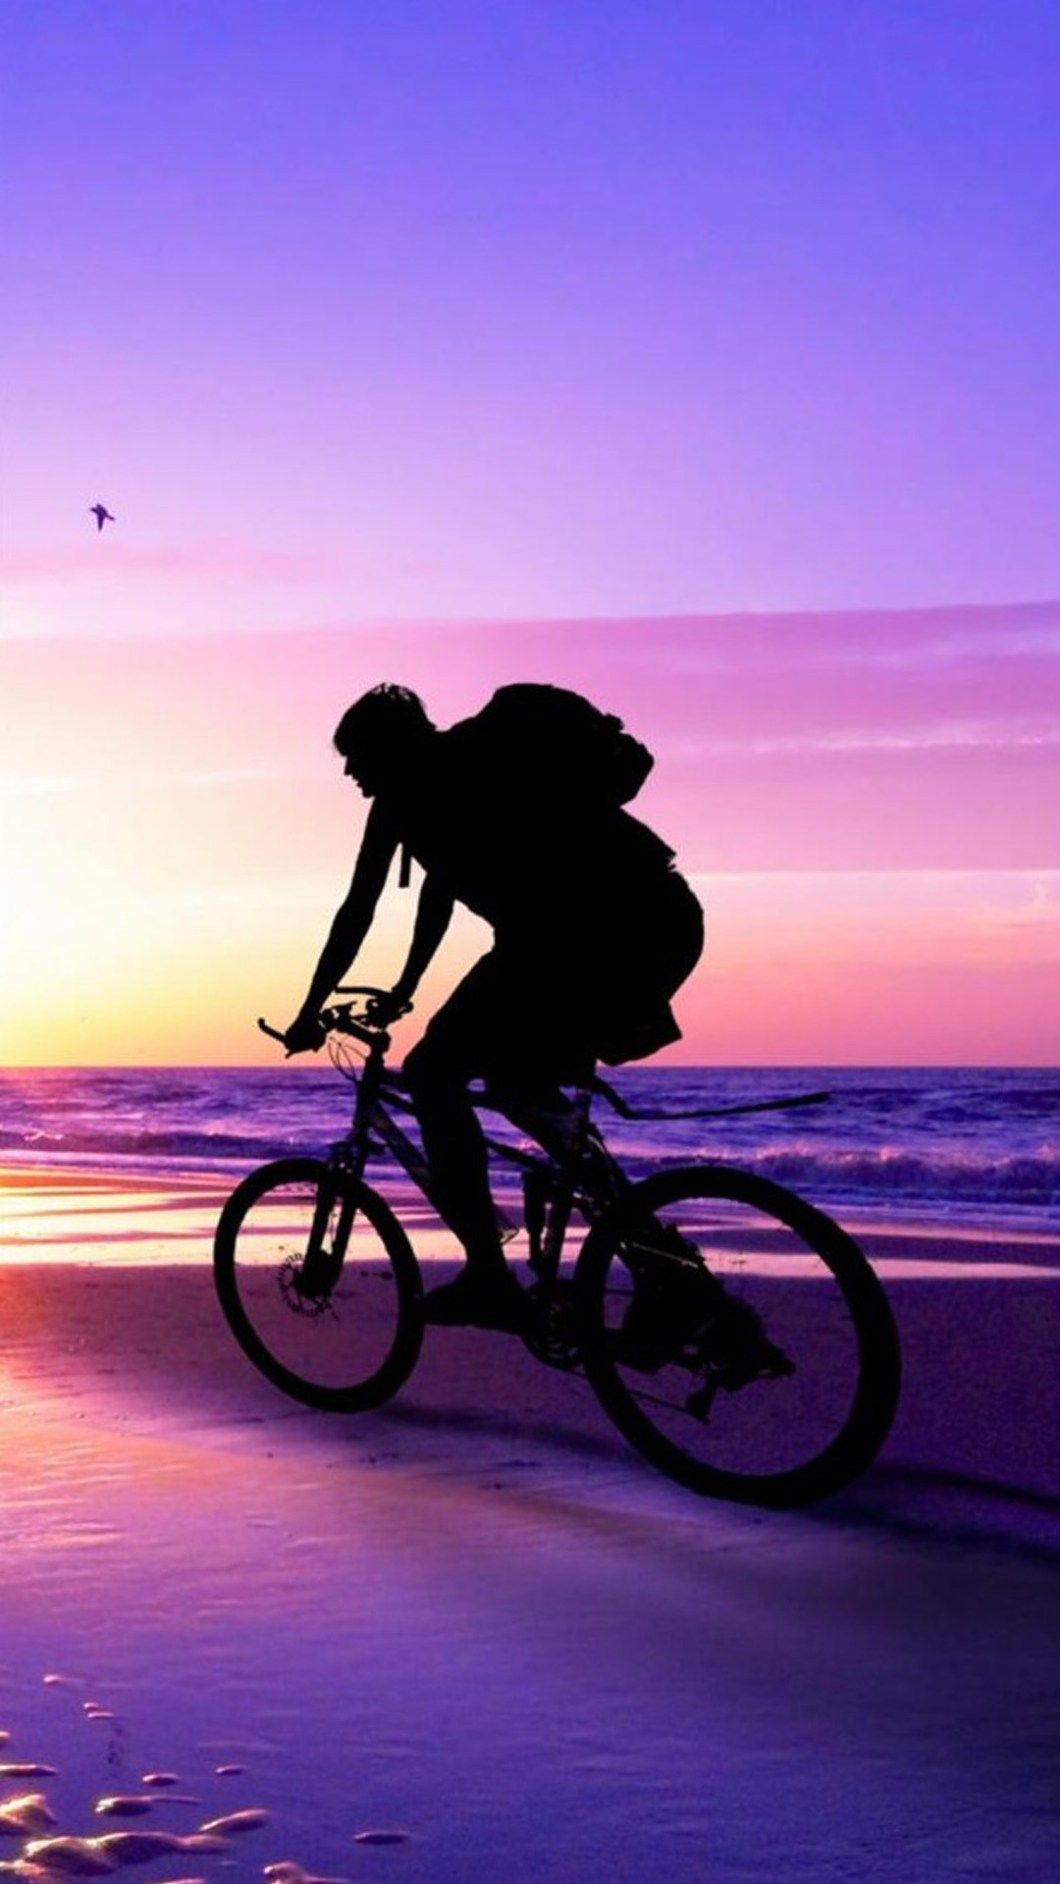 Beach Sunset Bicycle Ride iPhone 6 Plus HD Wallpaper. Wallpaper